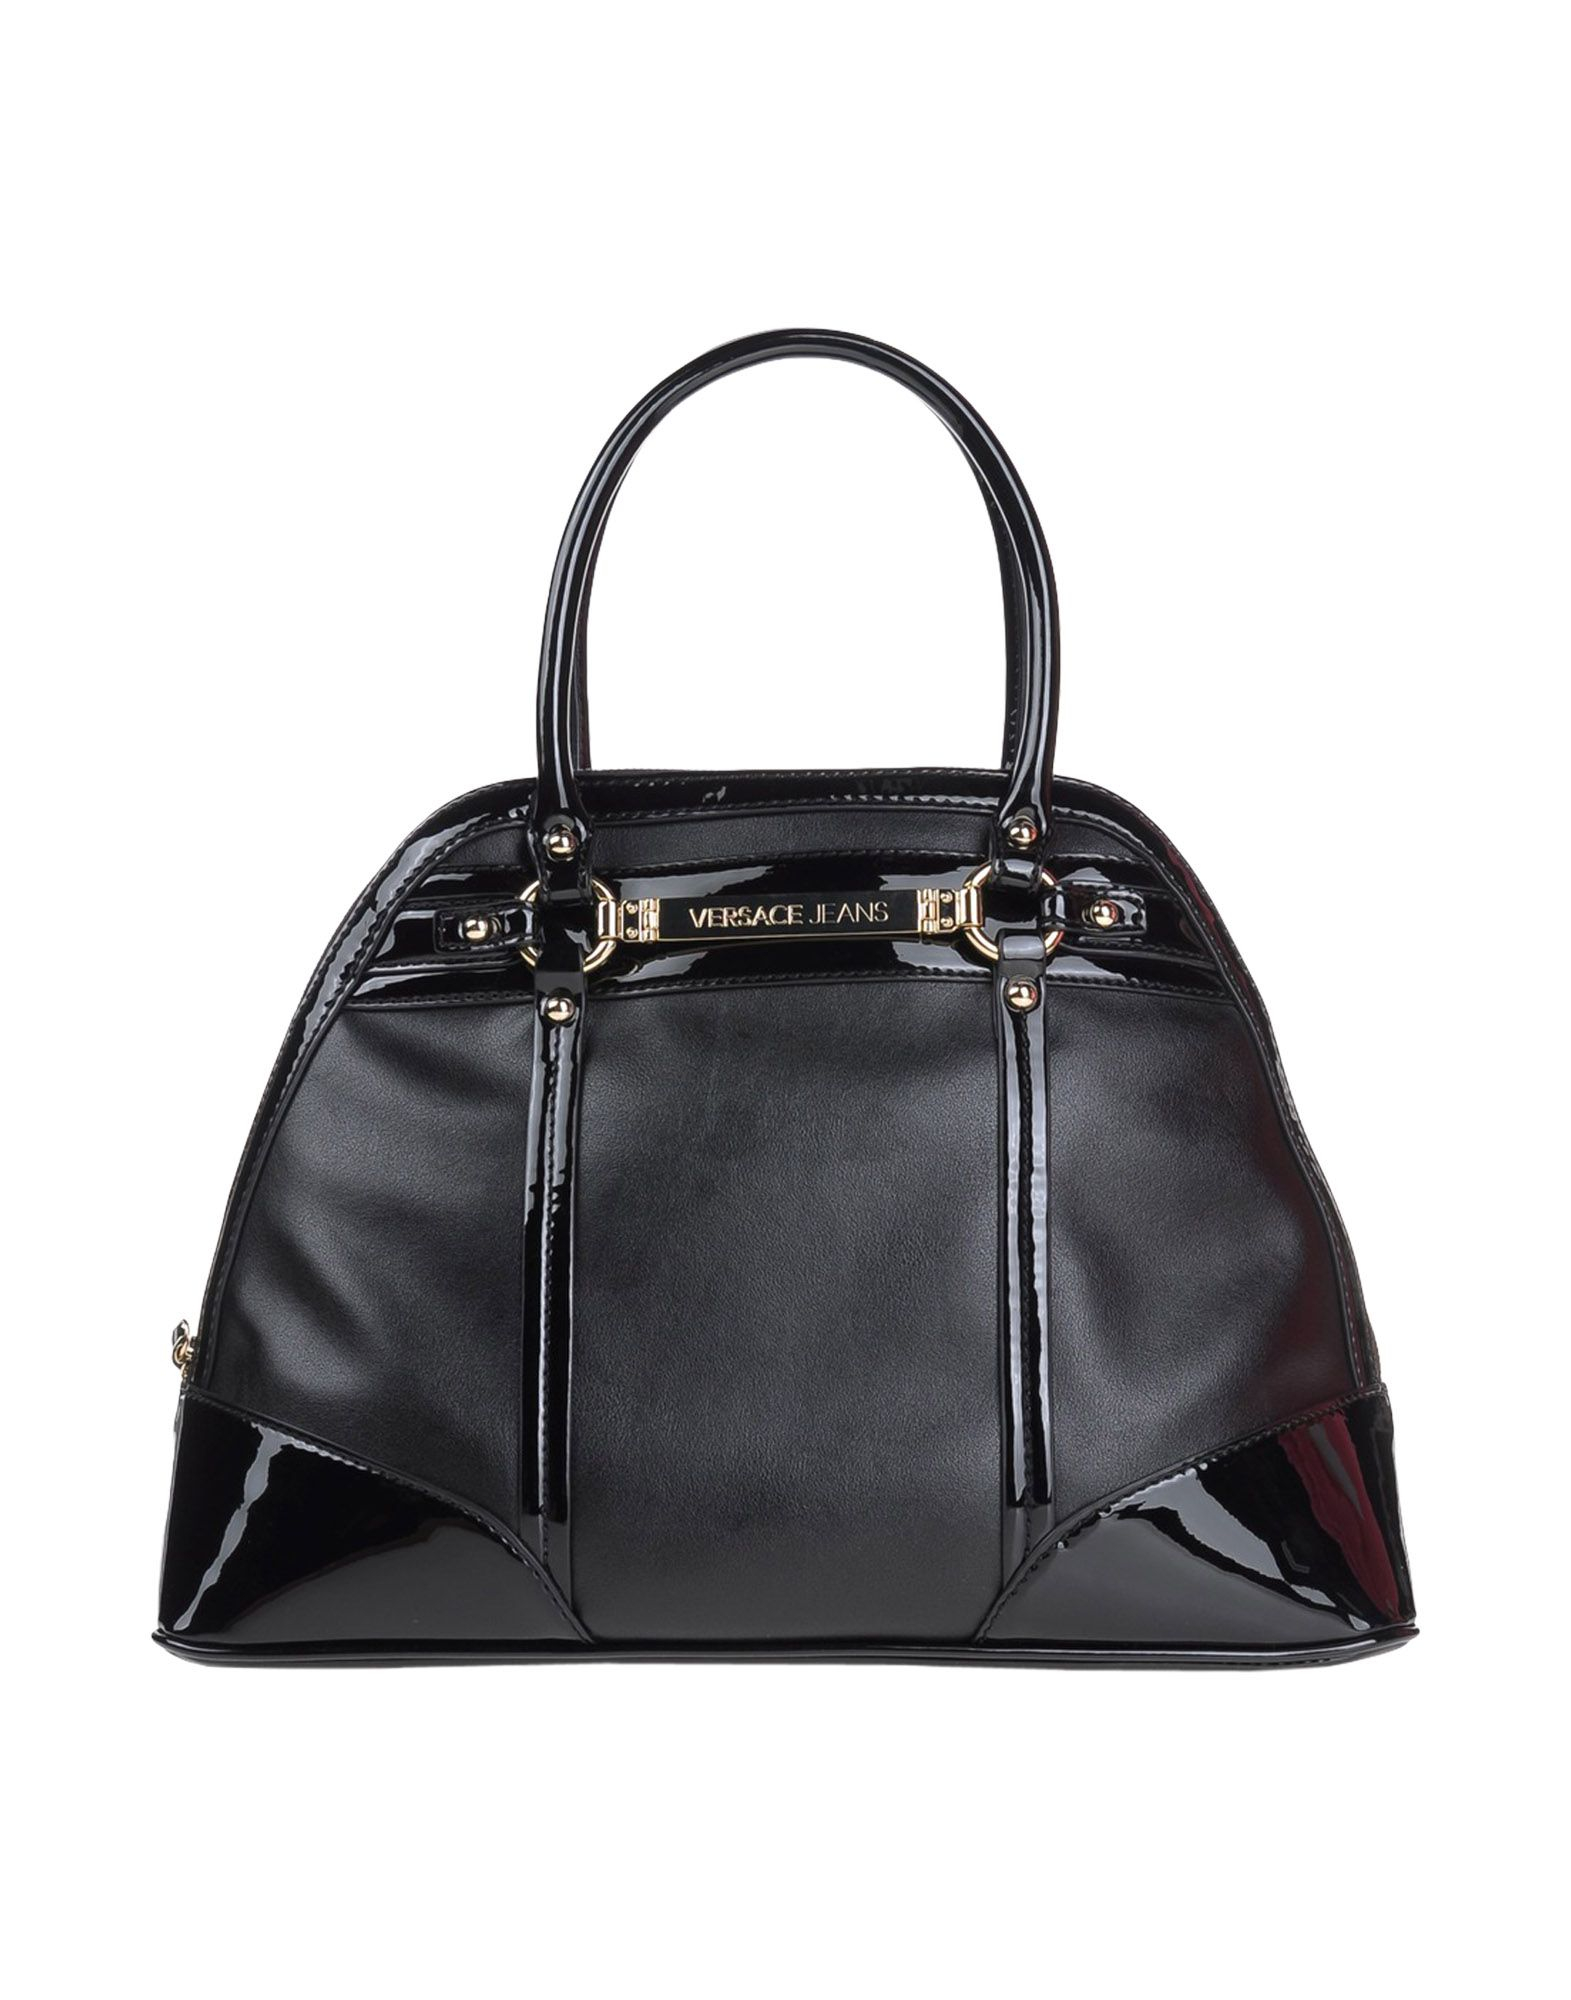 Versace jeans Handbag in Black | Lyst